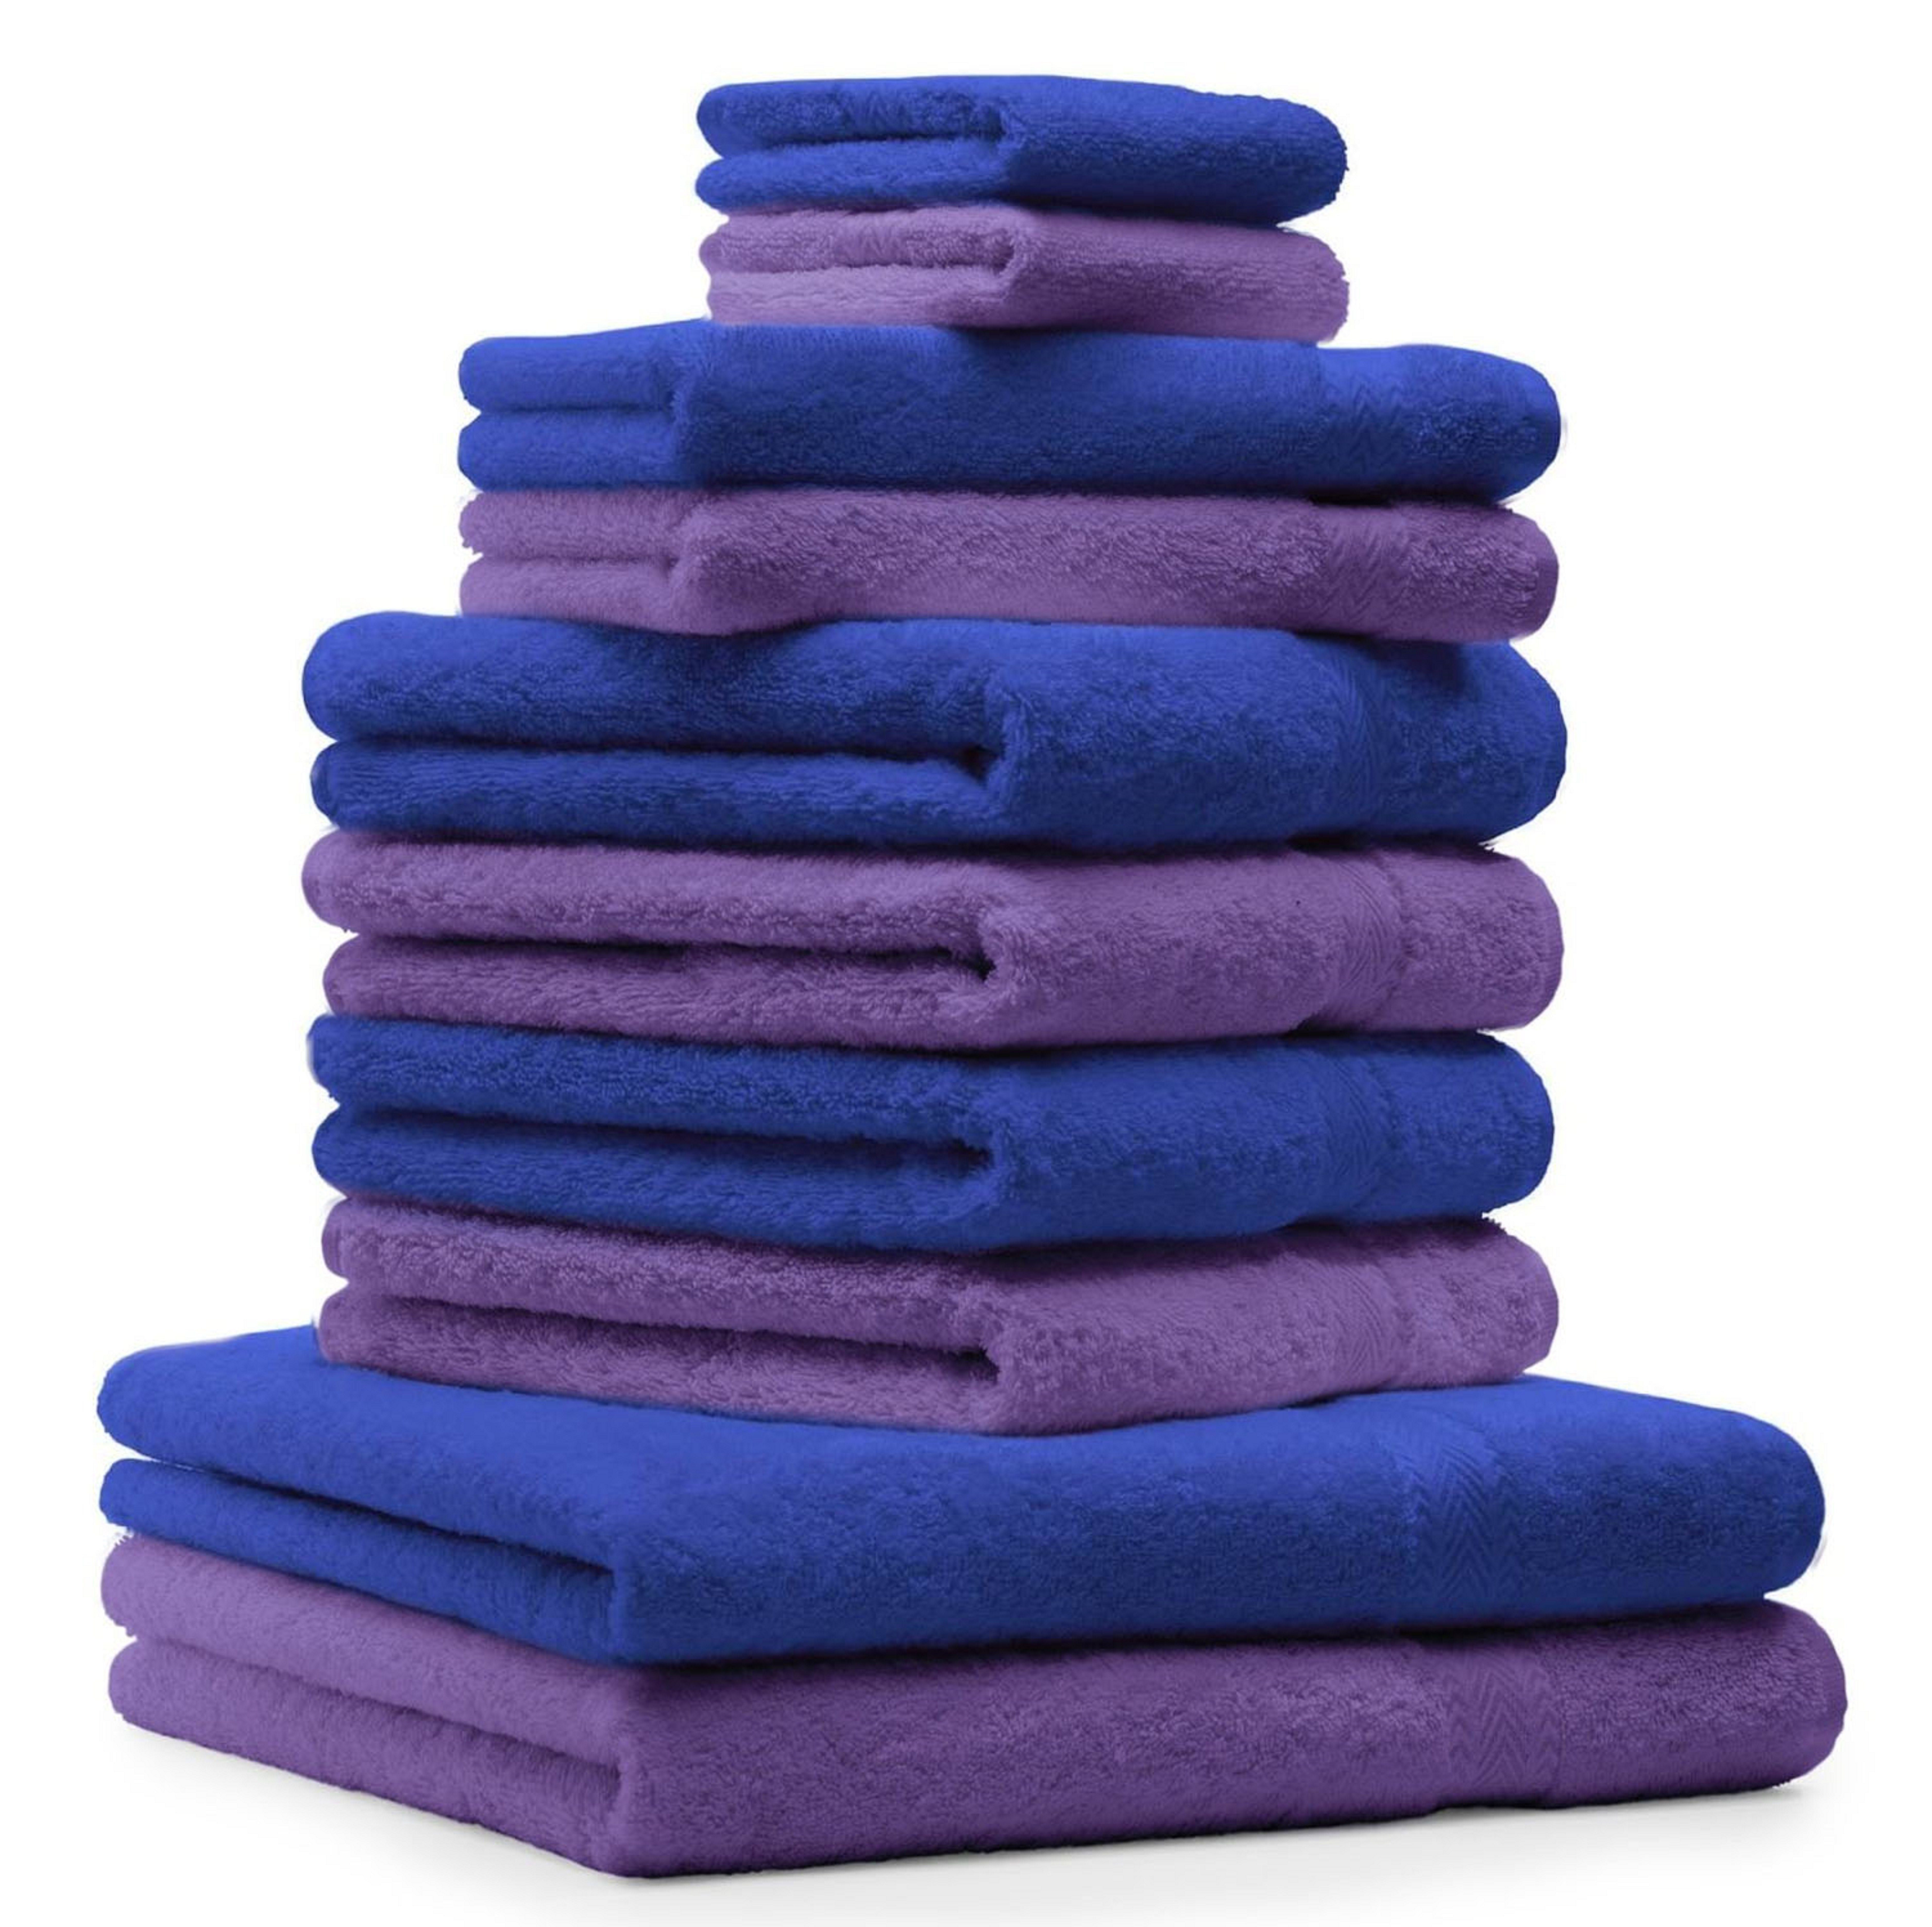 Betz Handtuch Set 10-TLG. Handtuch-Set Classic, 100% Baumwolle, (Set, 10-tlg), Farbe lila und royalblau